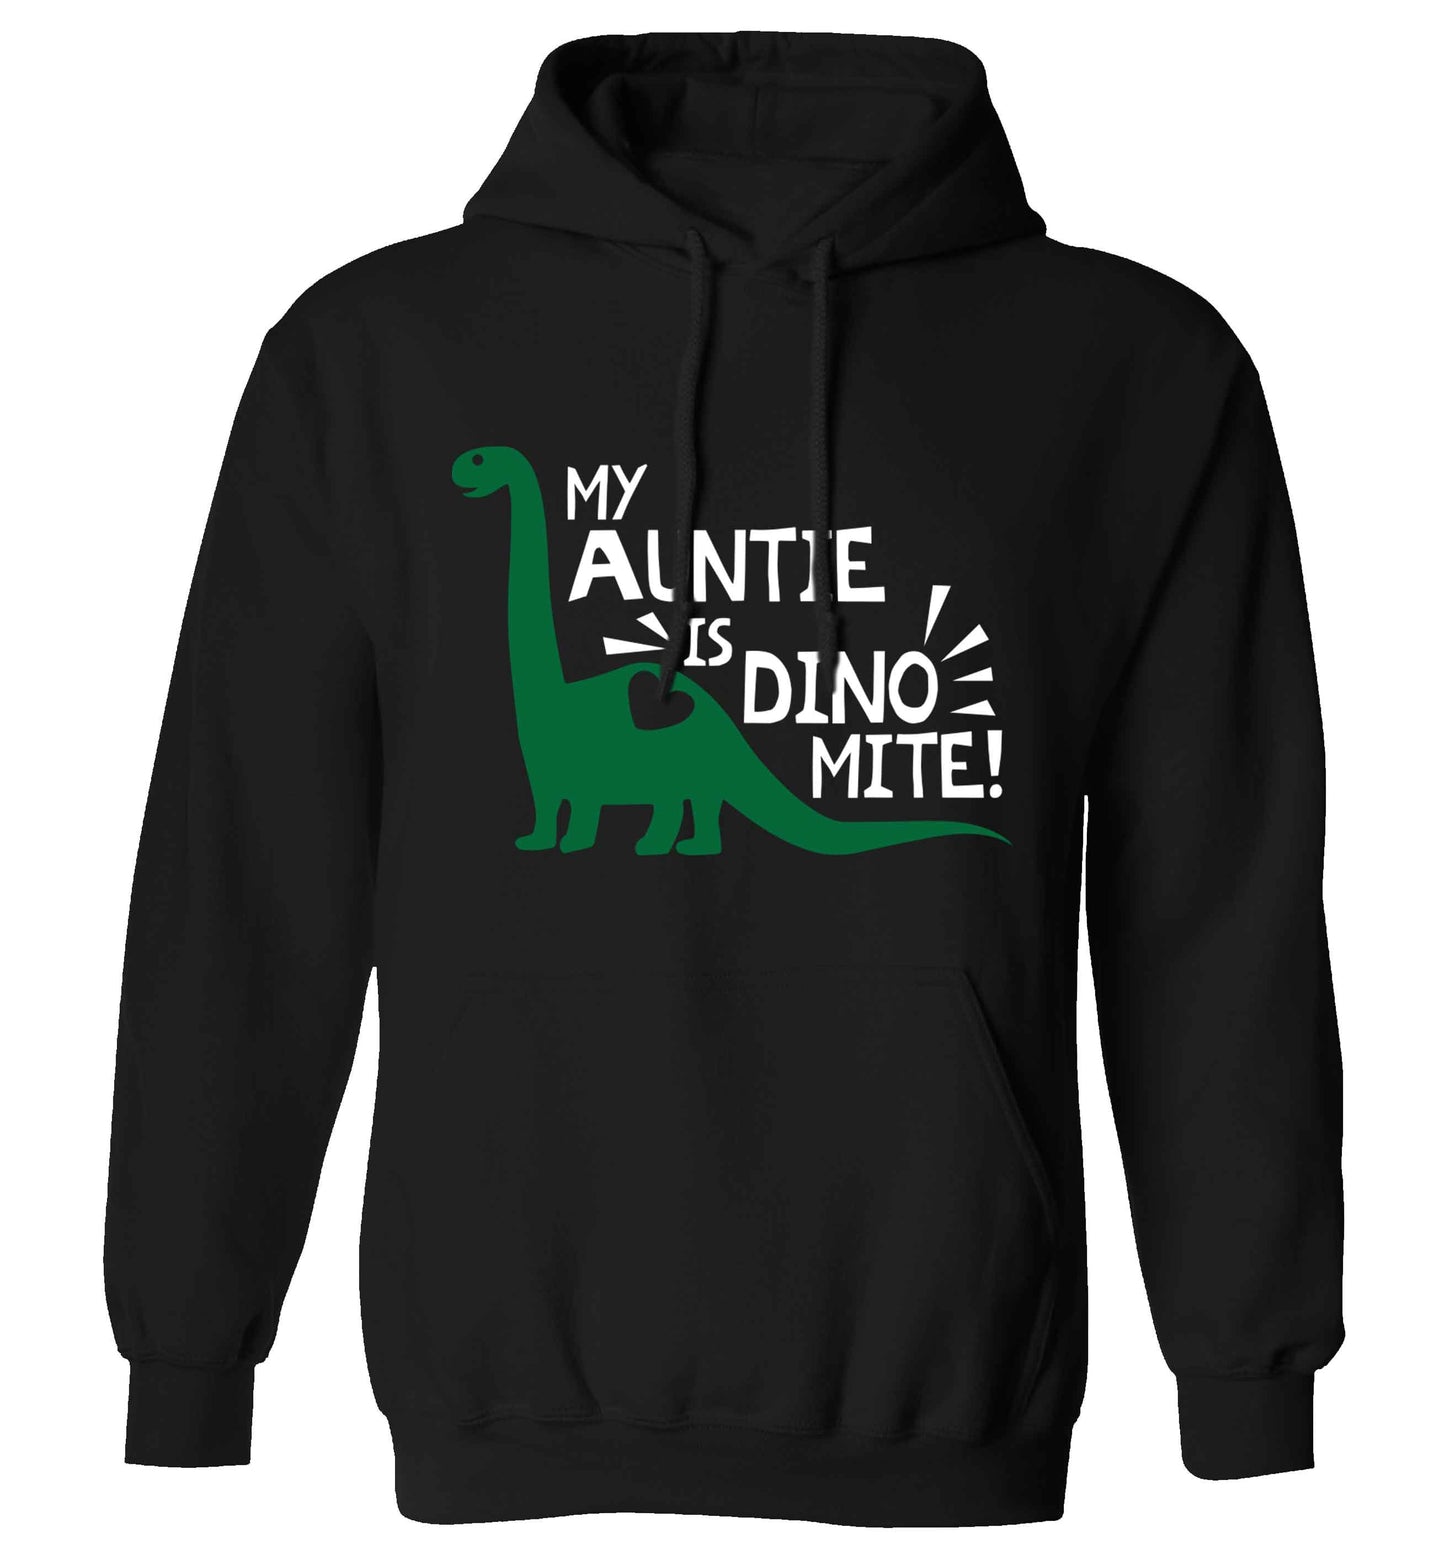 My auntie is dinomite! adults unisex black hoodie 2XL